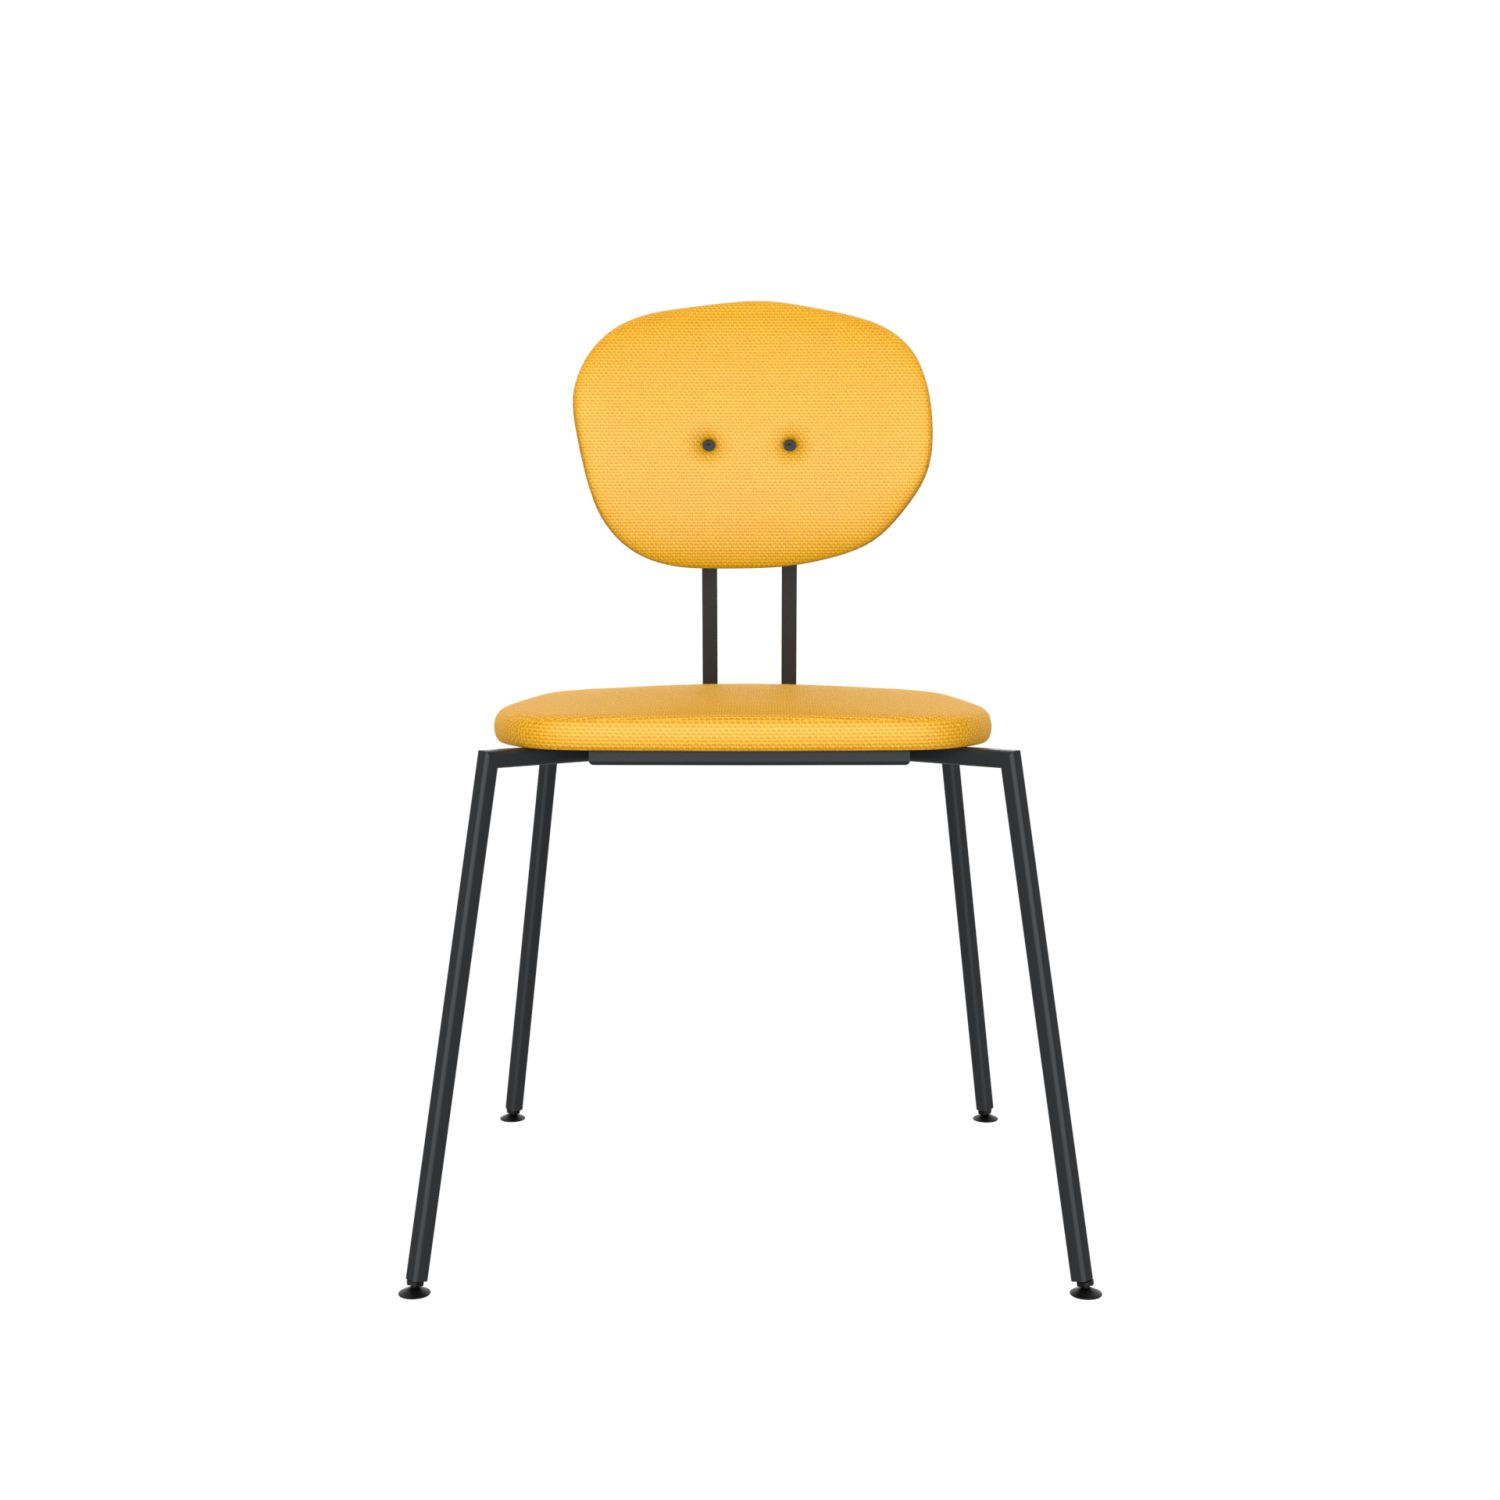 lensvelt maarten baas chair 141 stackable without armrests backrest a lemon yellow 051 black ral9005 hard leg ends